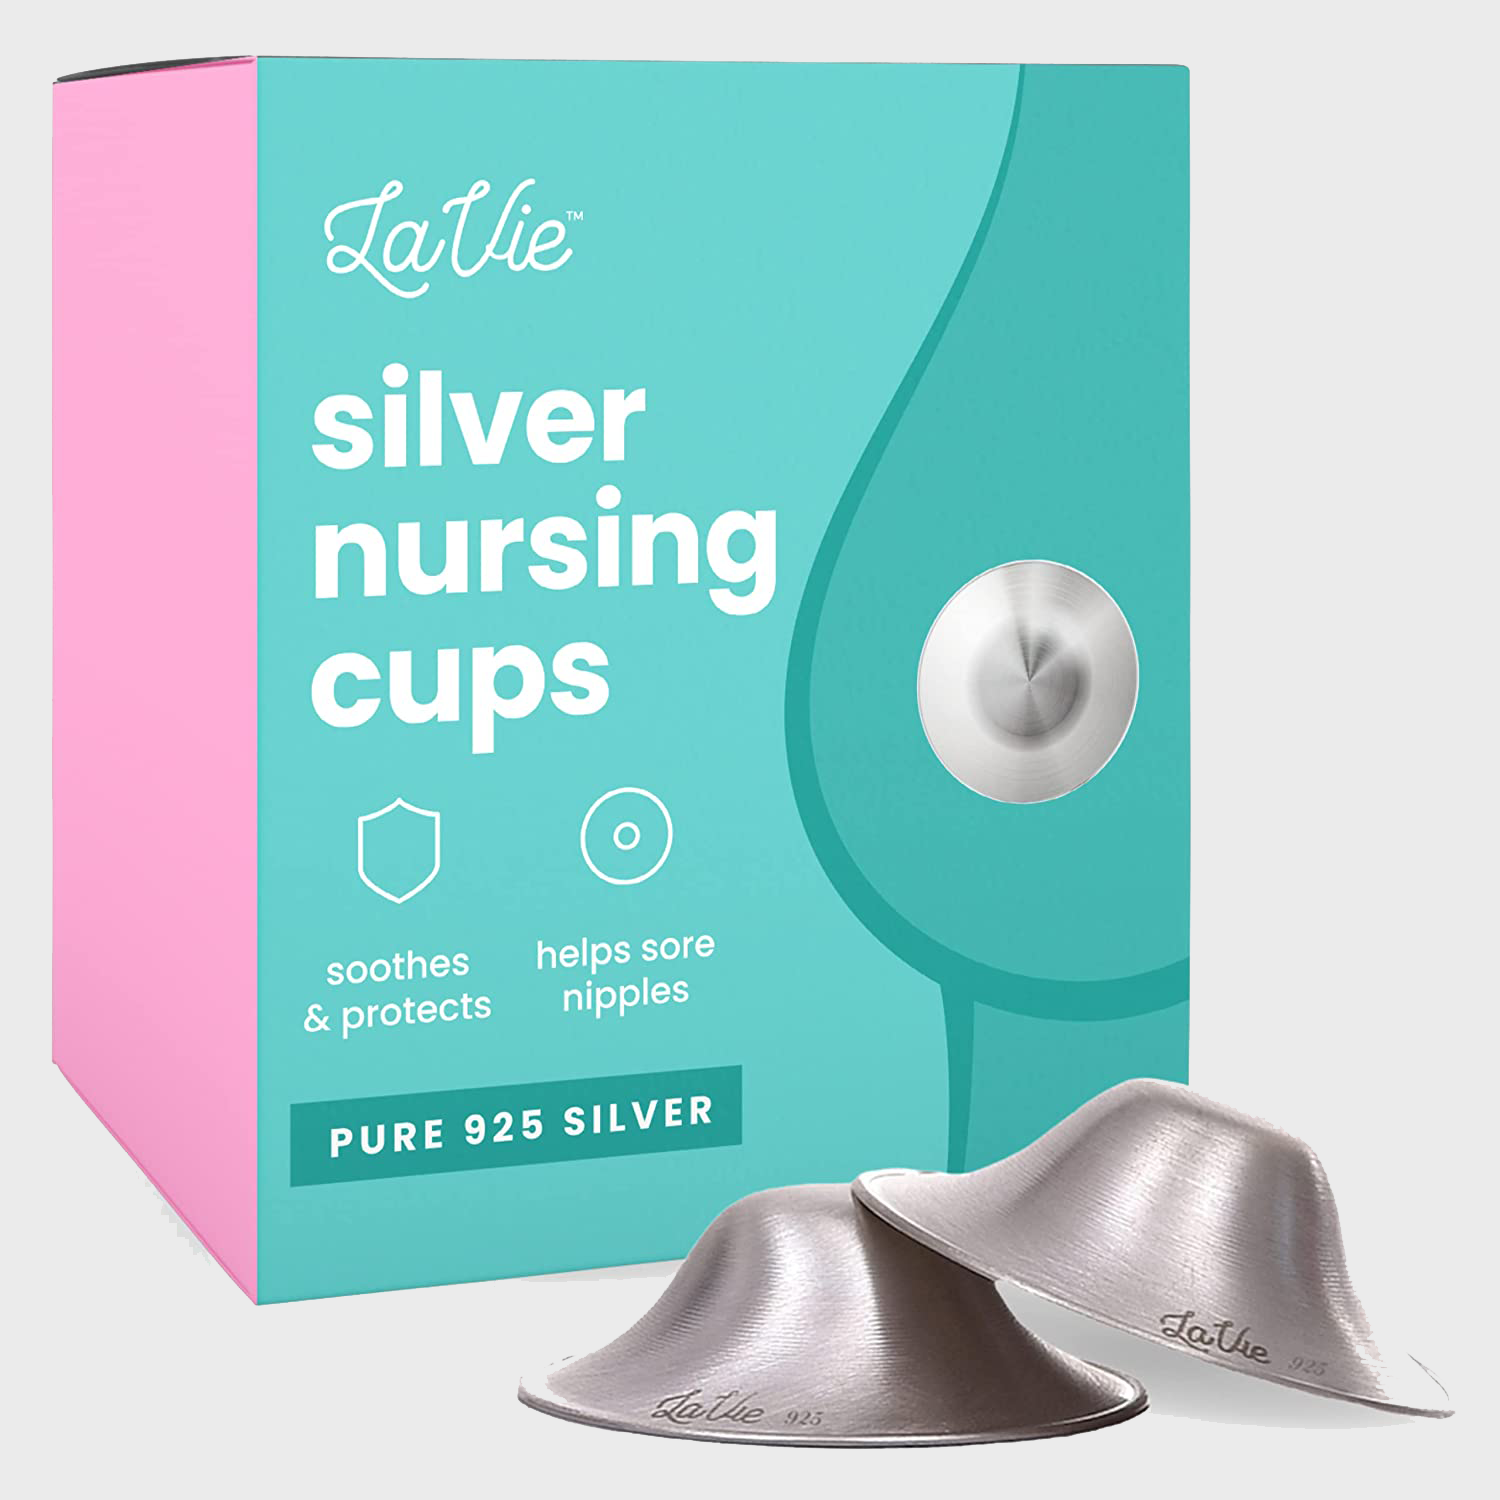 Silverette Silver Nursing Cups - The Breastfeeding Center, LLC